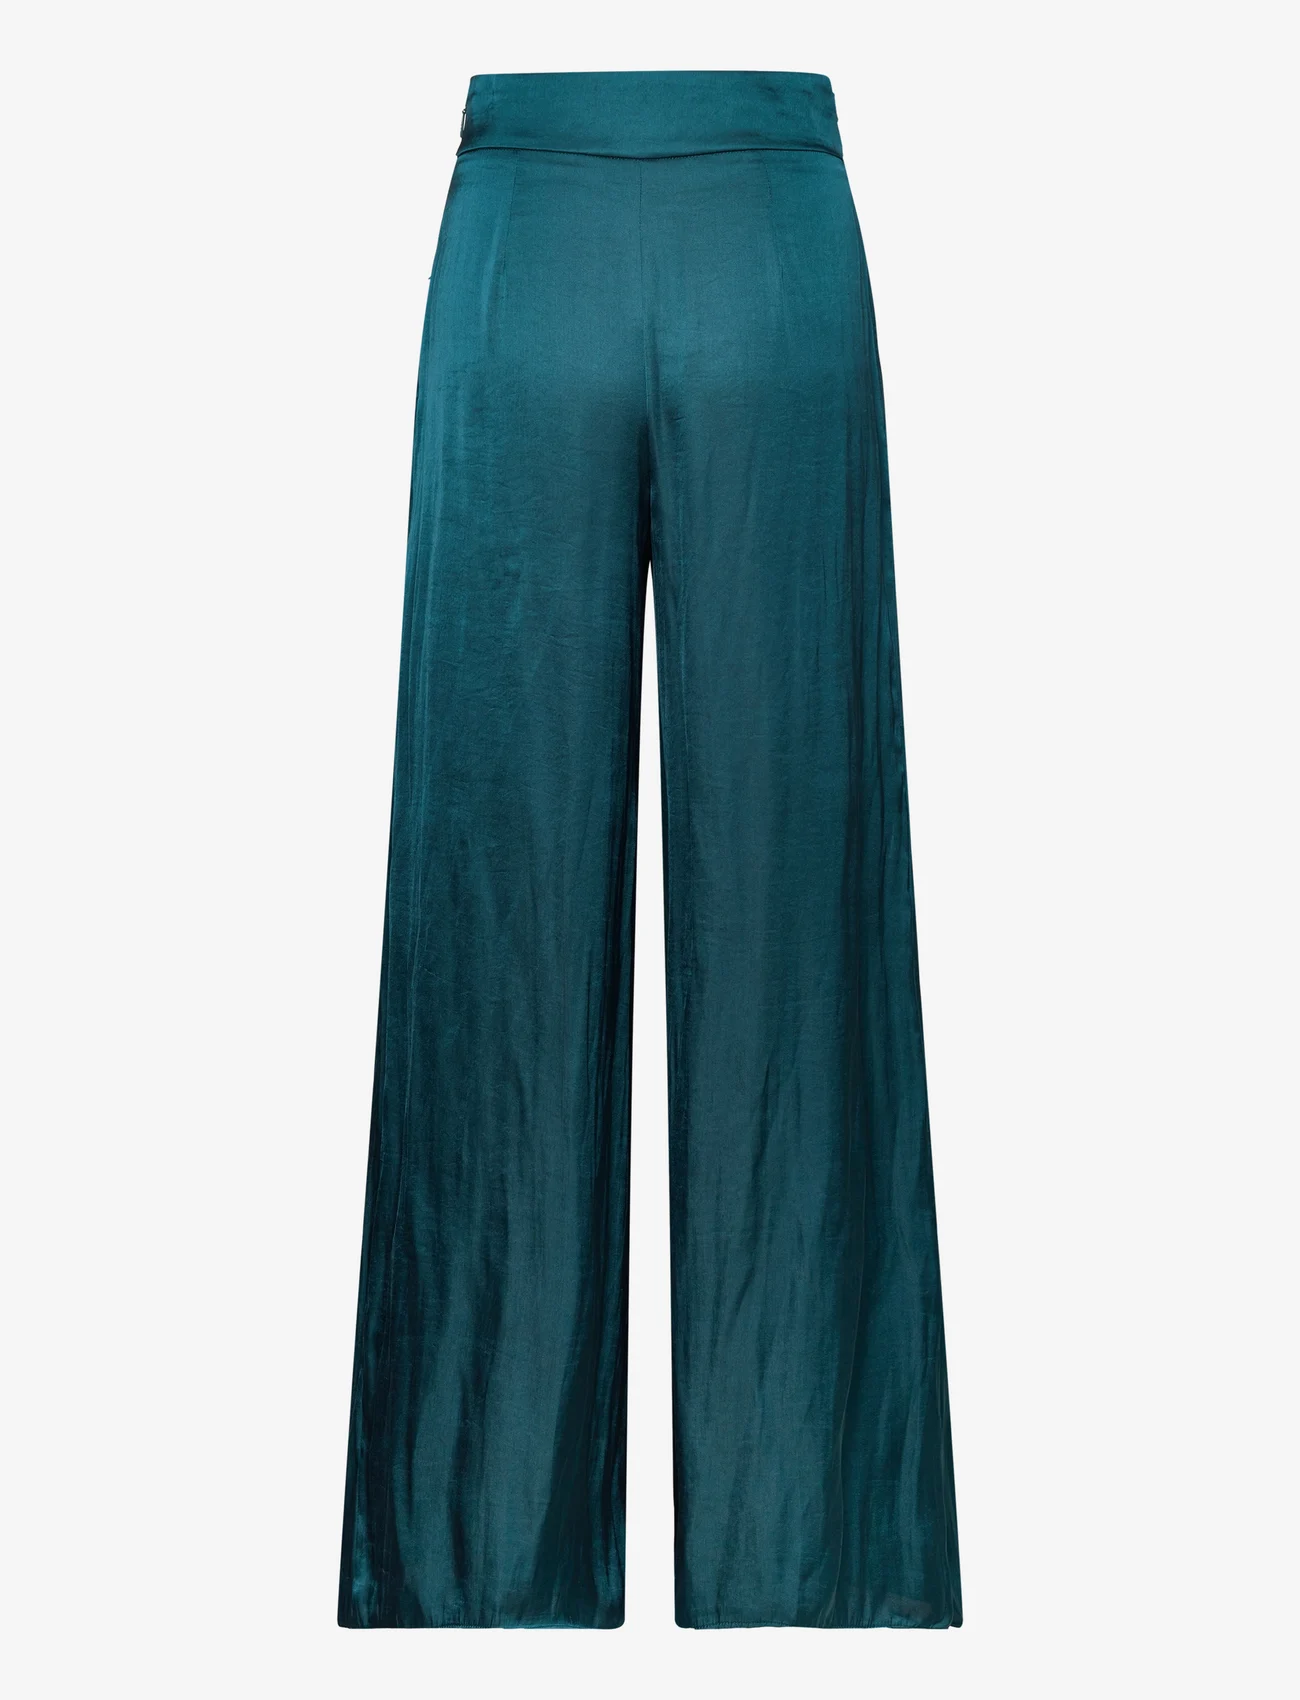 Mango - Satin wideleg trousers - leveälahkeiset housut - dark blue - 1